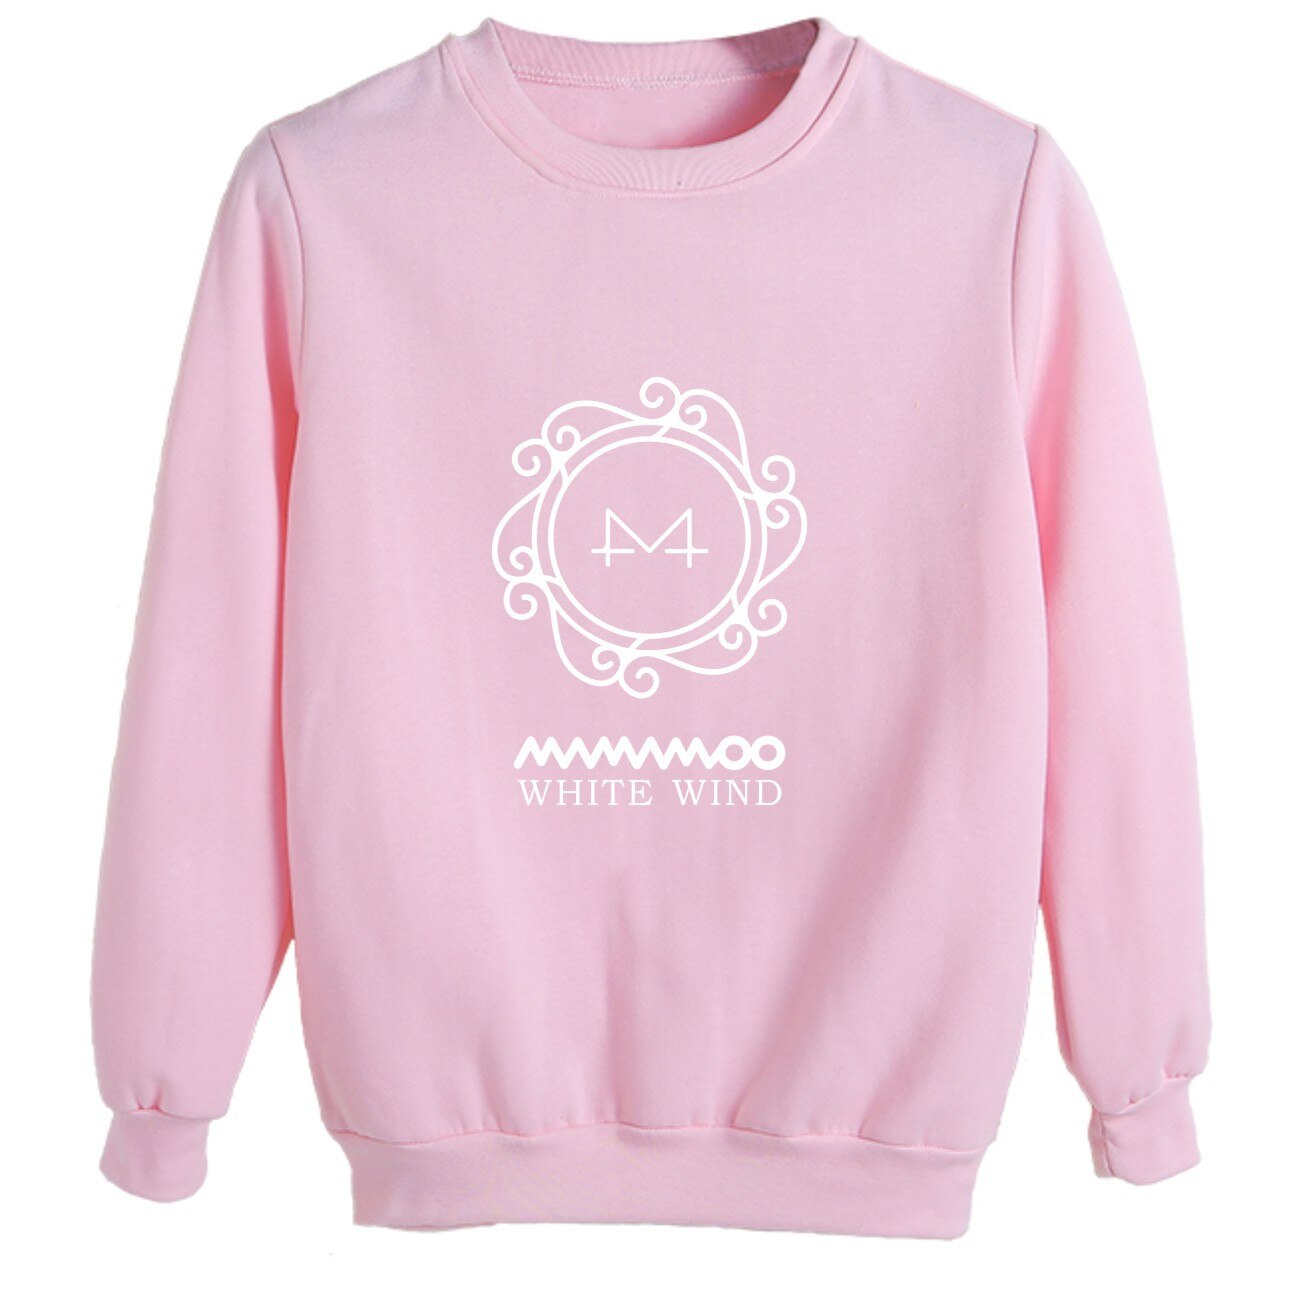 New arrival MAMAMOO pullover Sweatshirt New Album WHITE WIND Sweatshirt kpop Harajuku Hip hop Tops Coat 2 - Mamamoo Store